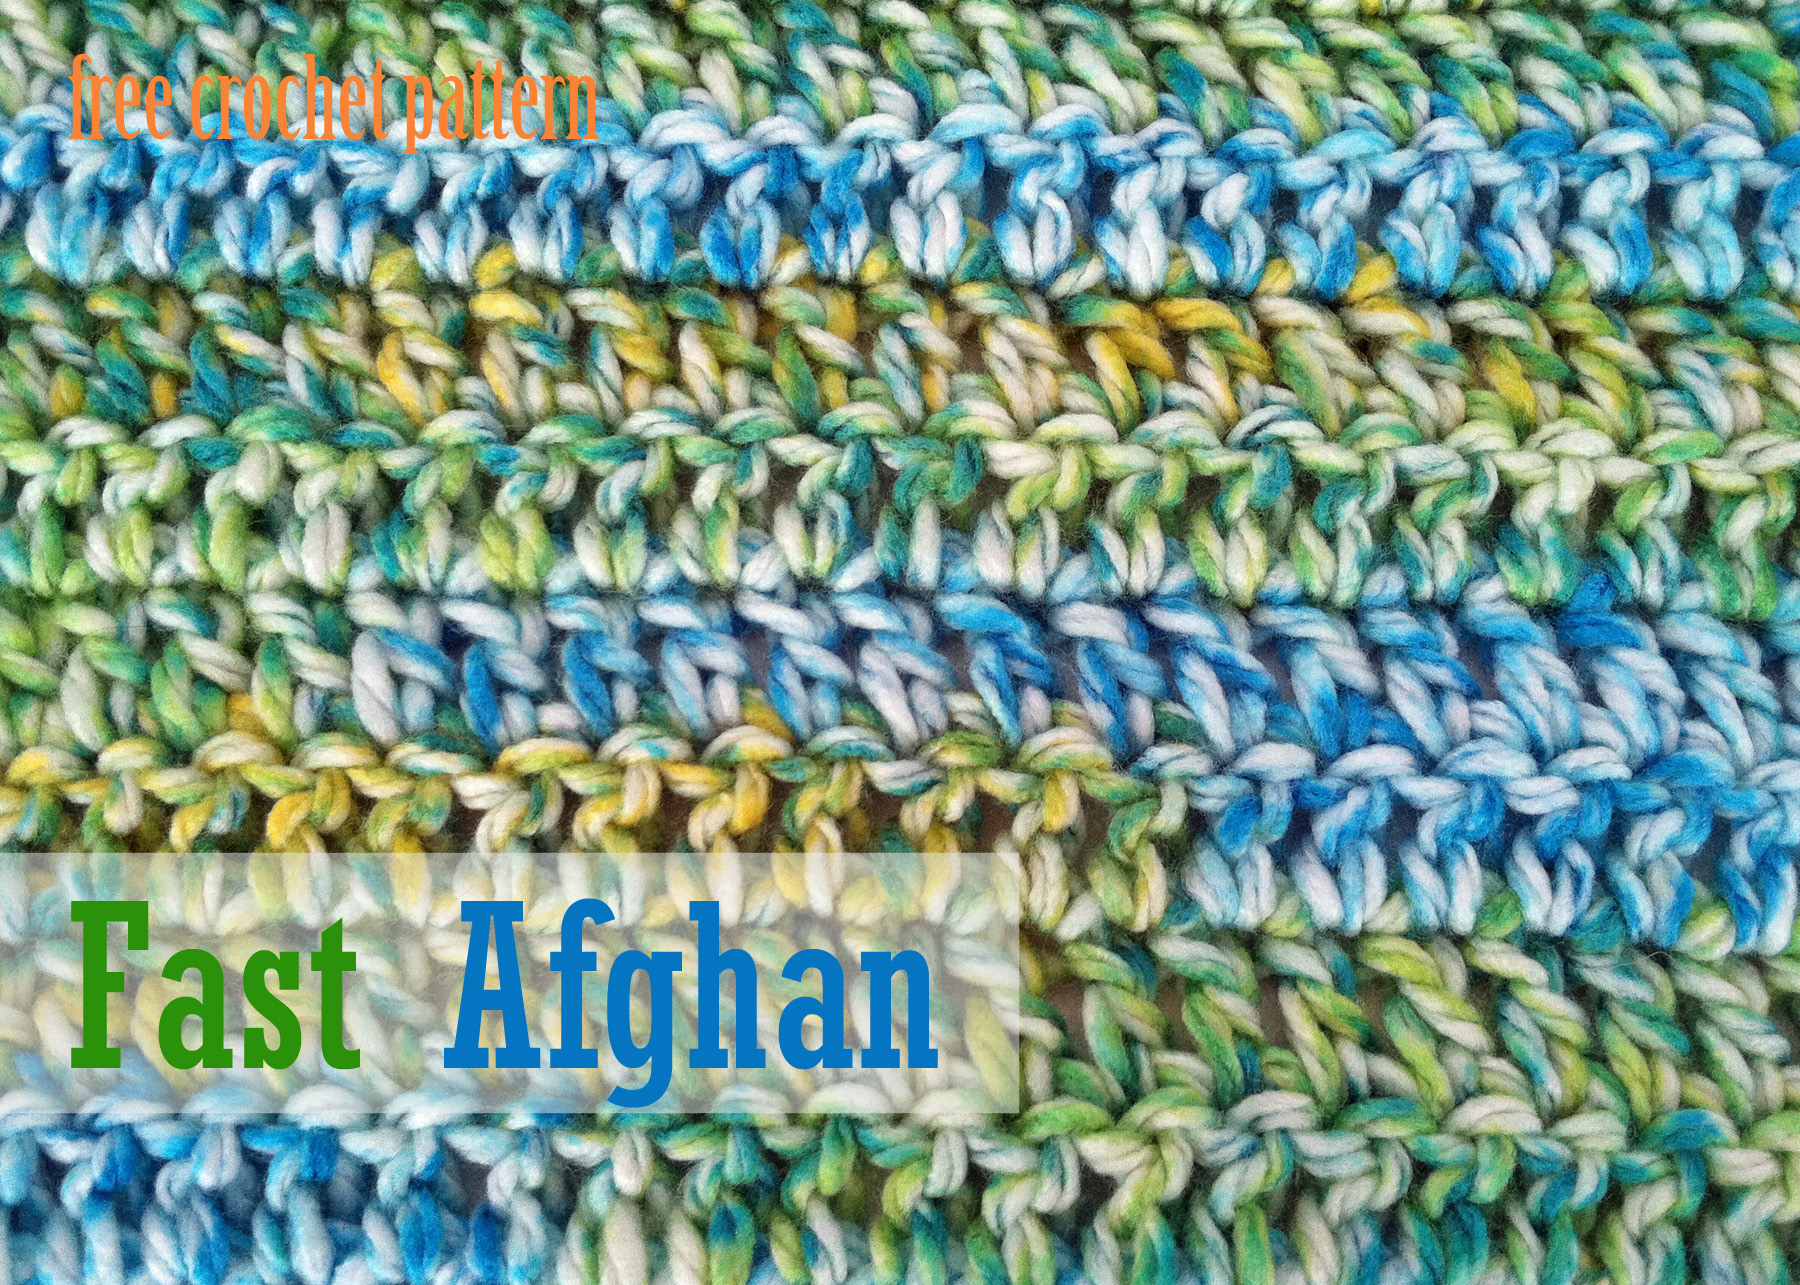 Crochet Patterns Free Afghan Free Crochet Pattern Fast Afghan